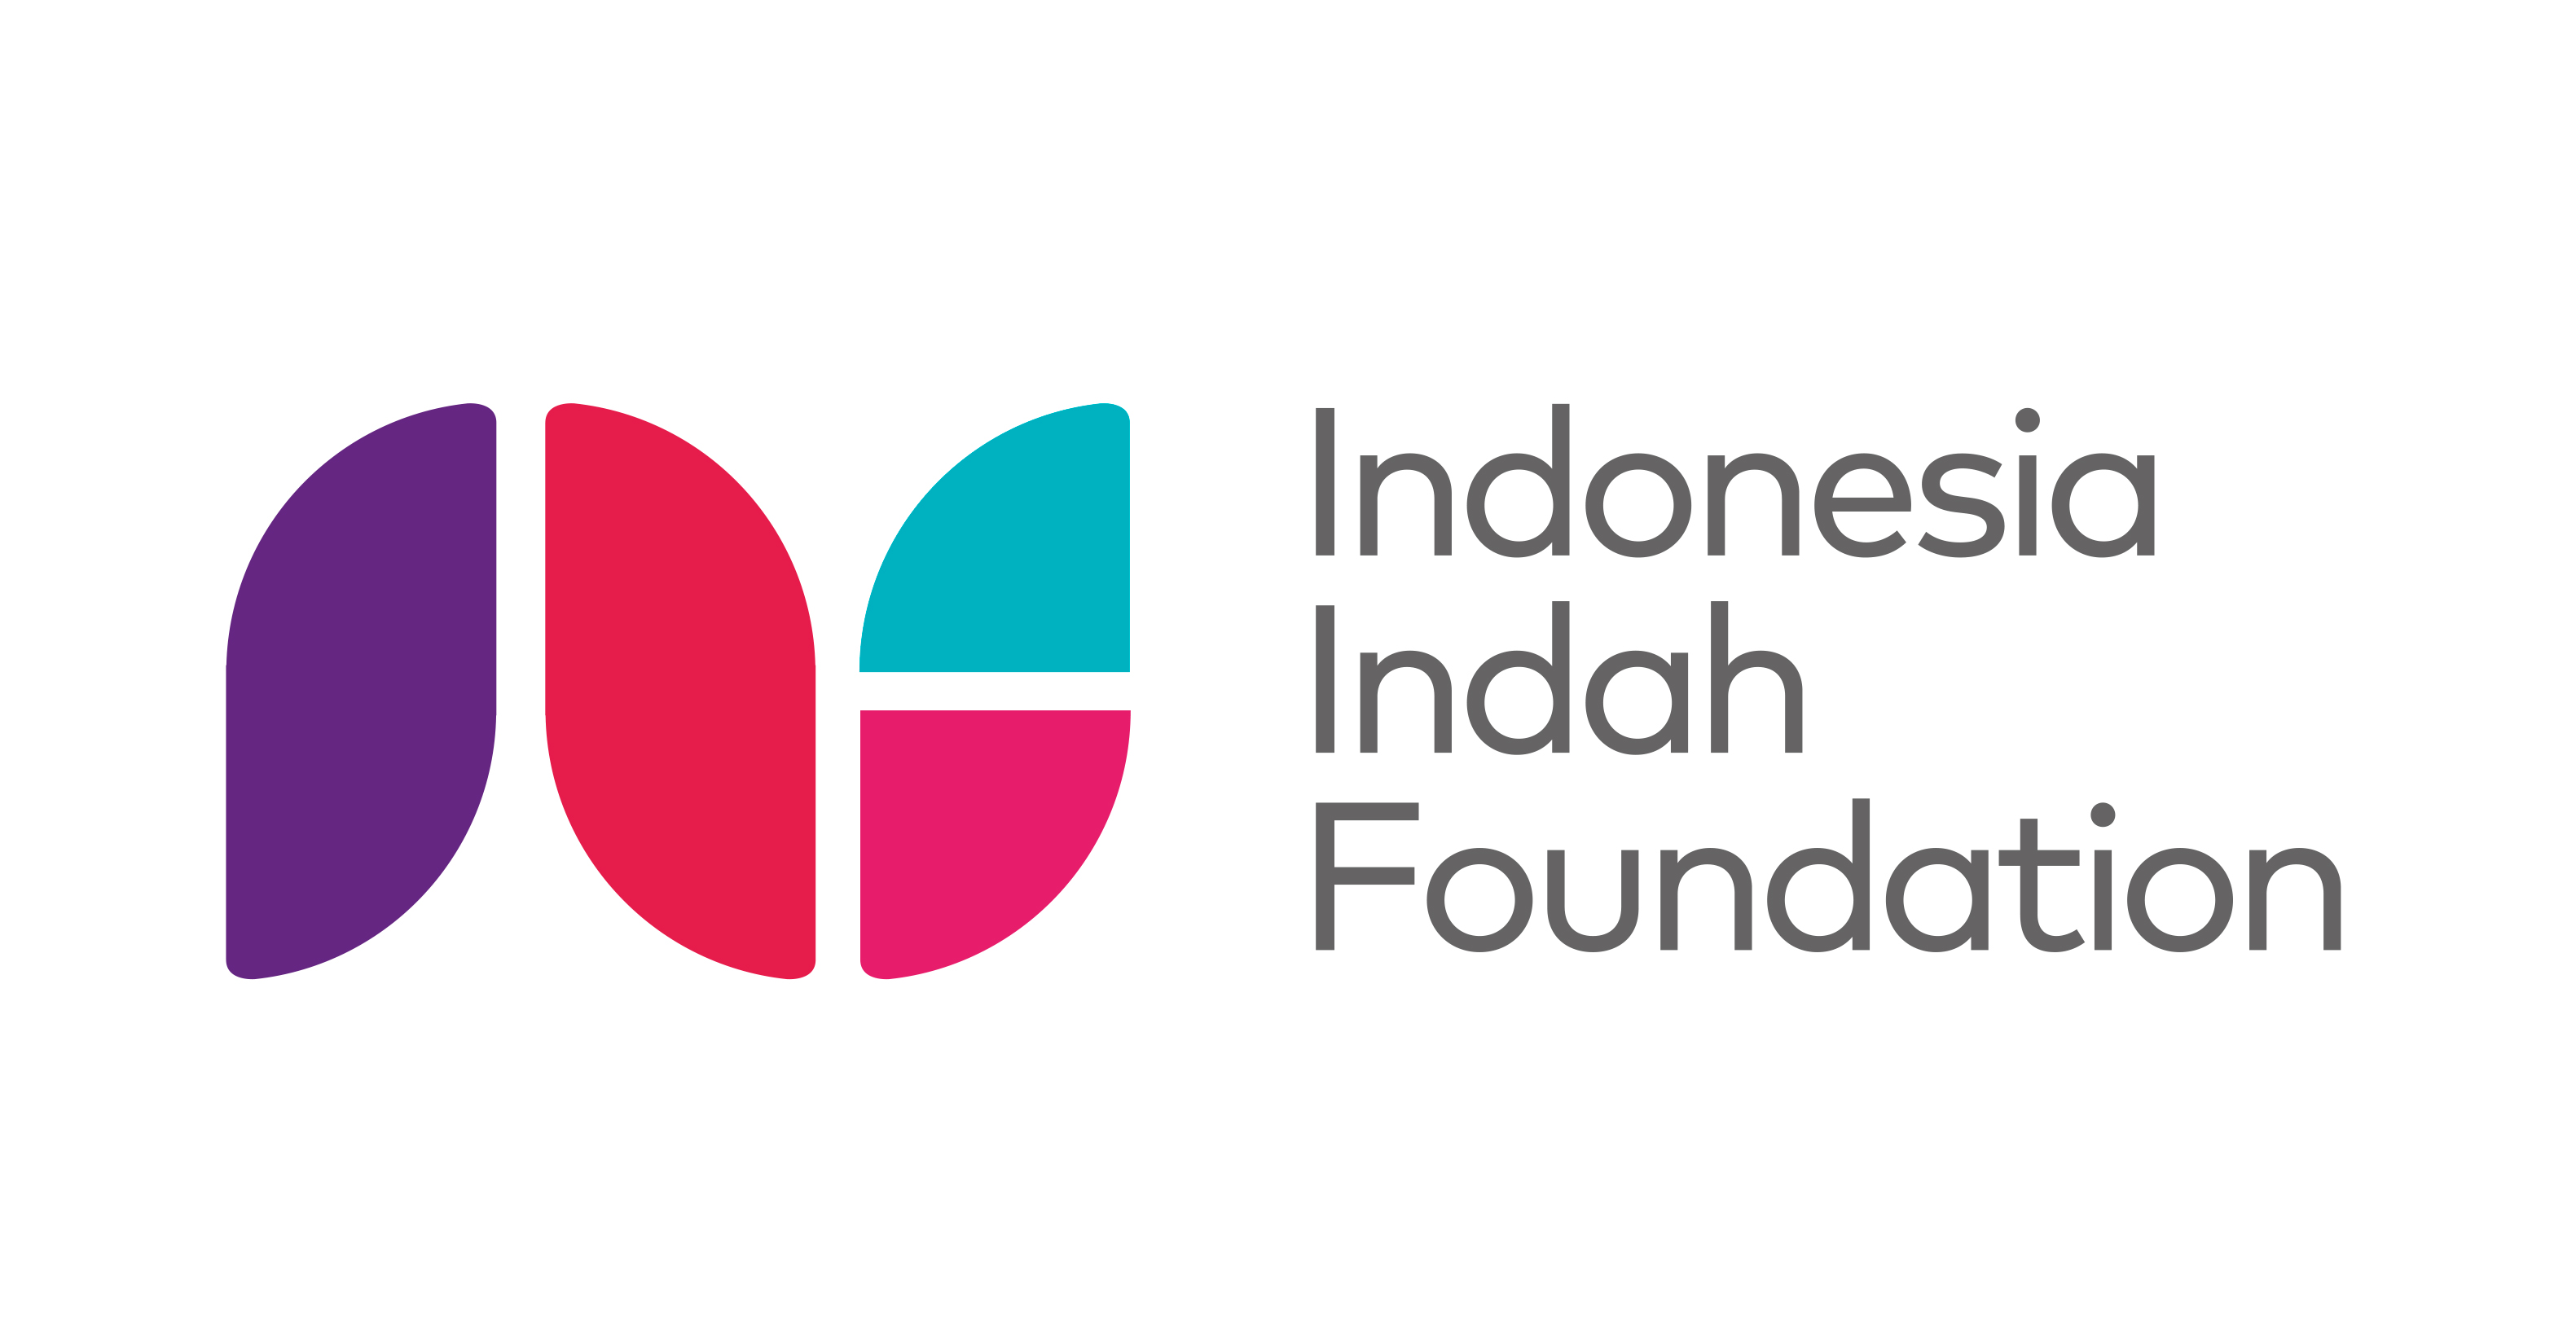 Indonesia Indah Foundation